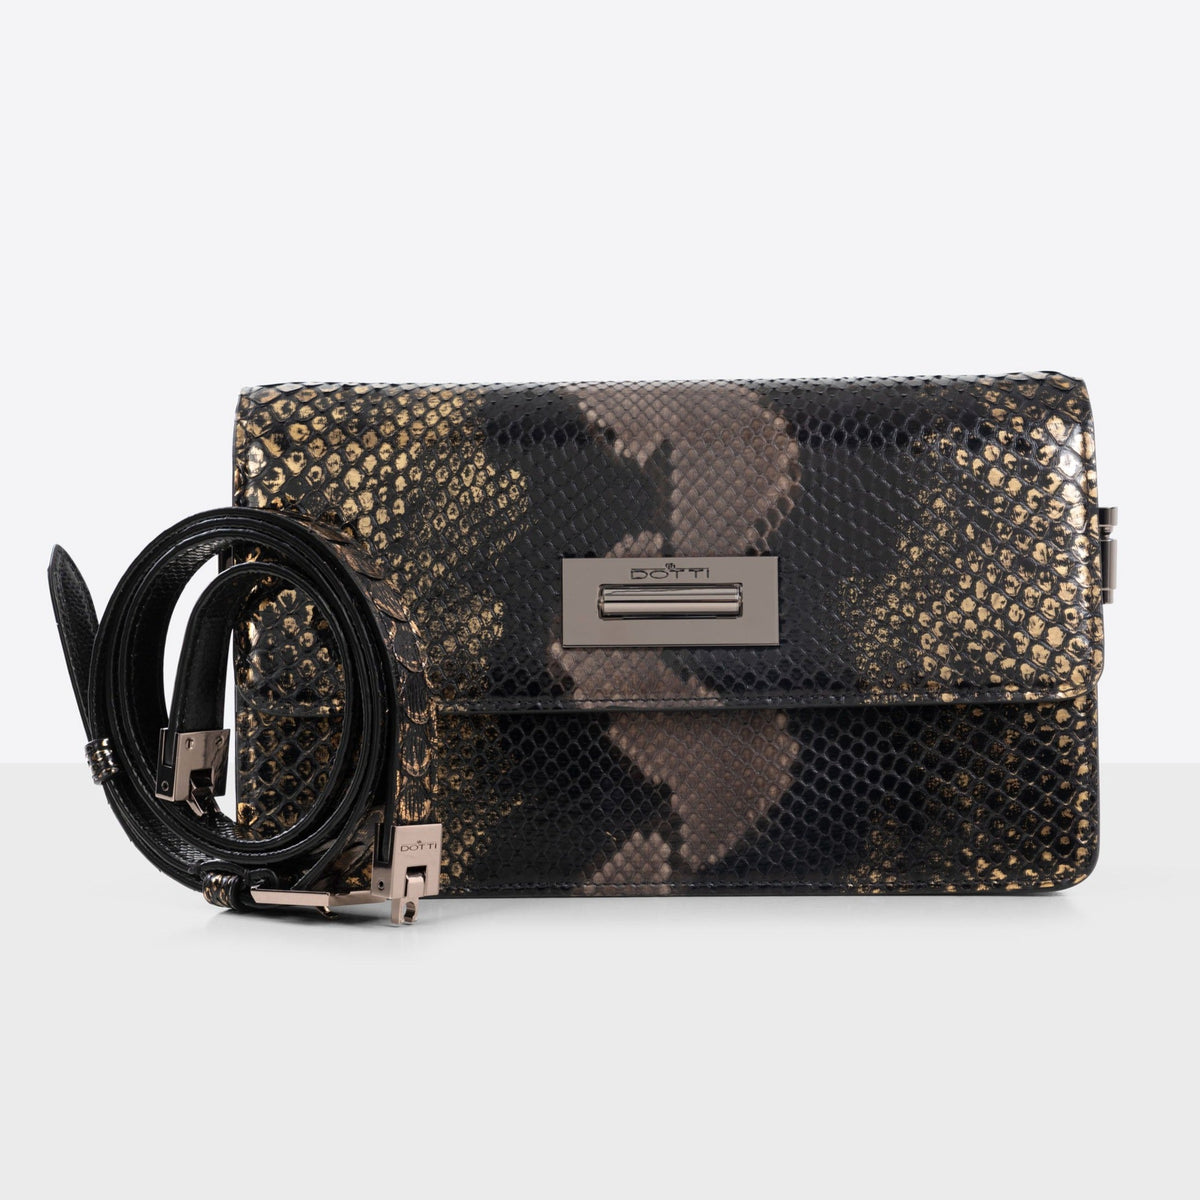 DOTTI Shoulder Bag in Black Python, Luxury Handbags. Made in Italy